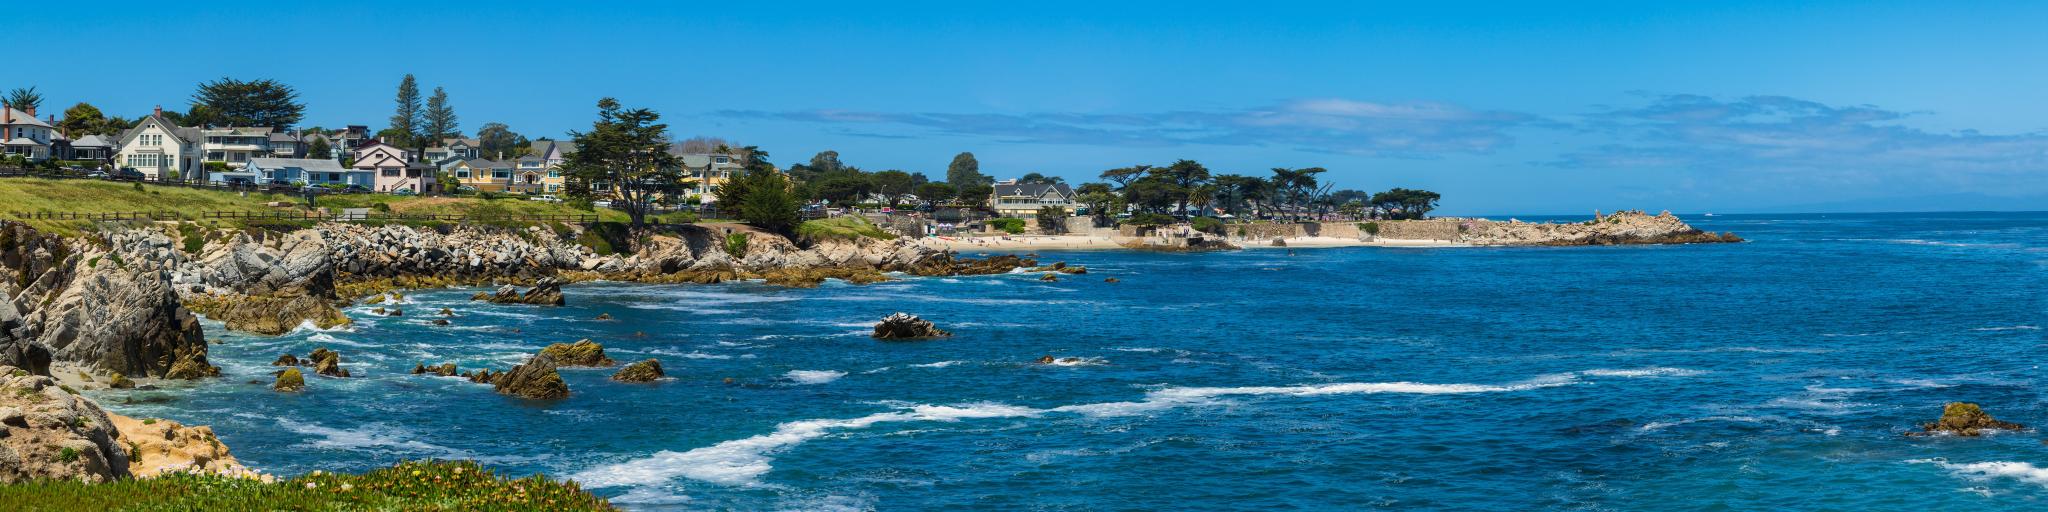 Panorama view of Monterey bay